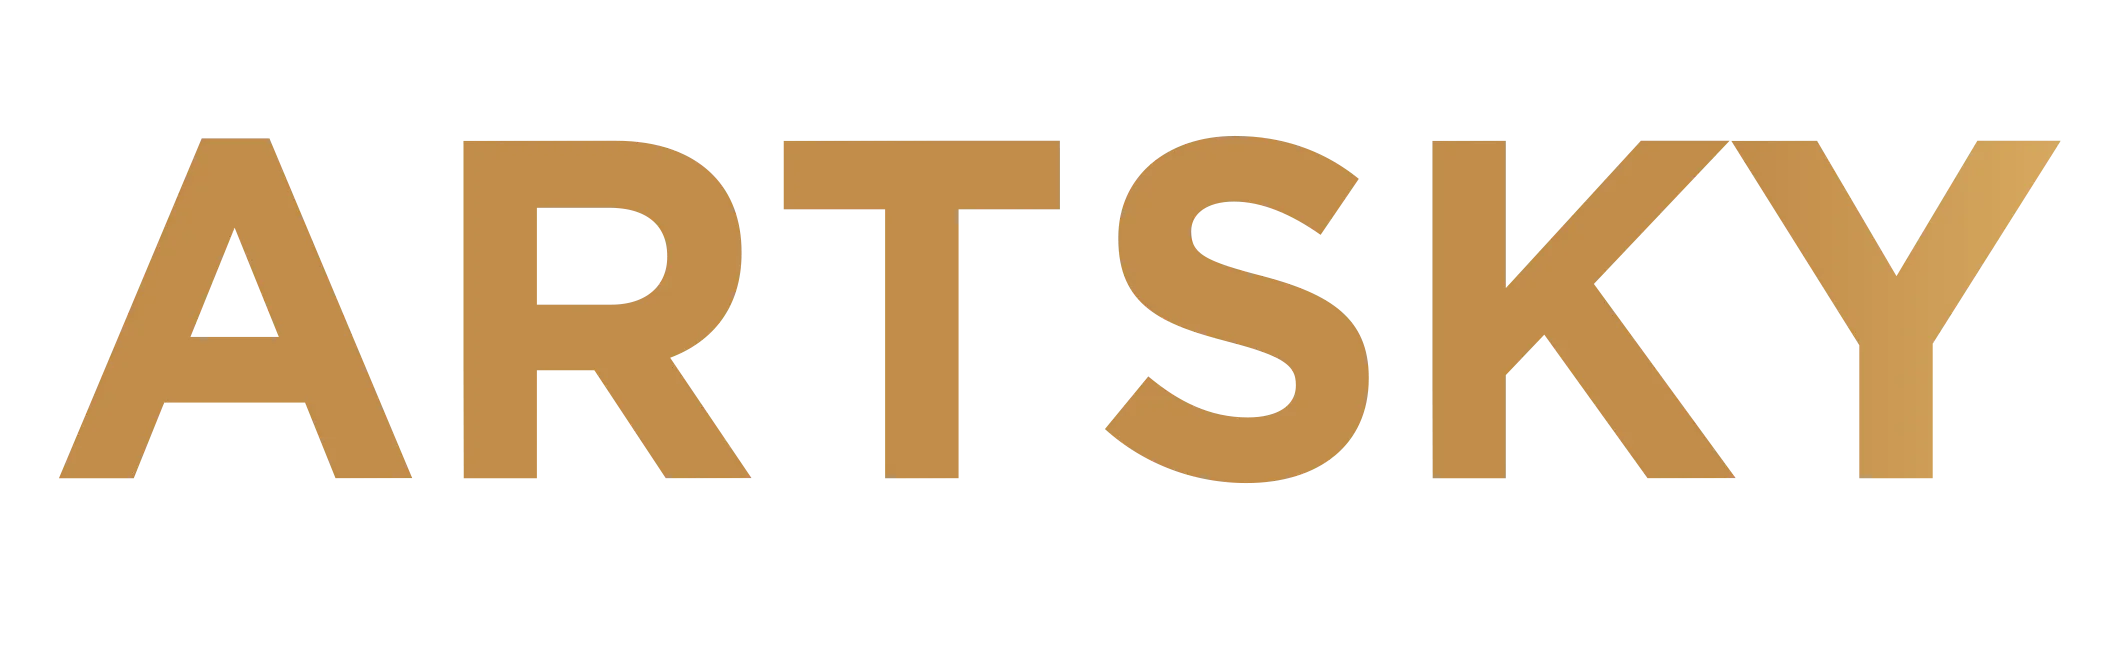 Artsky logo